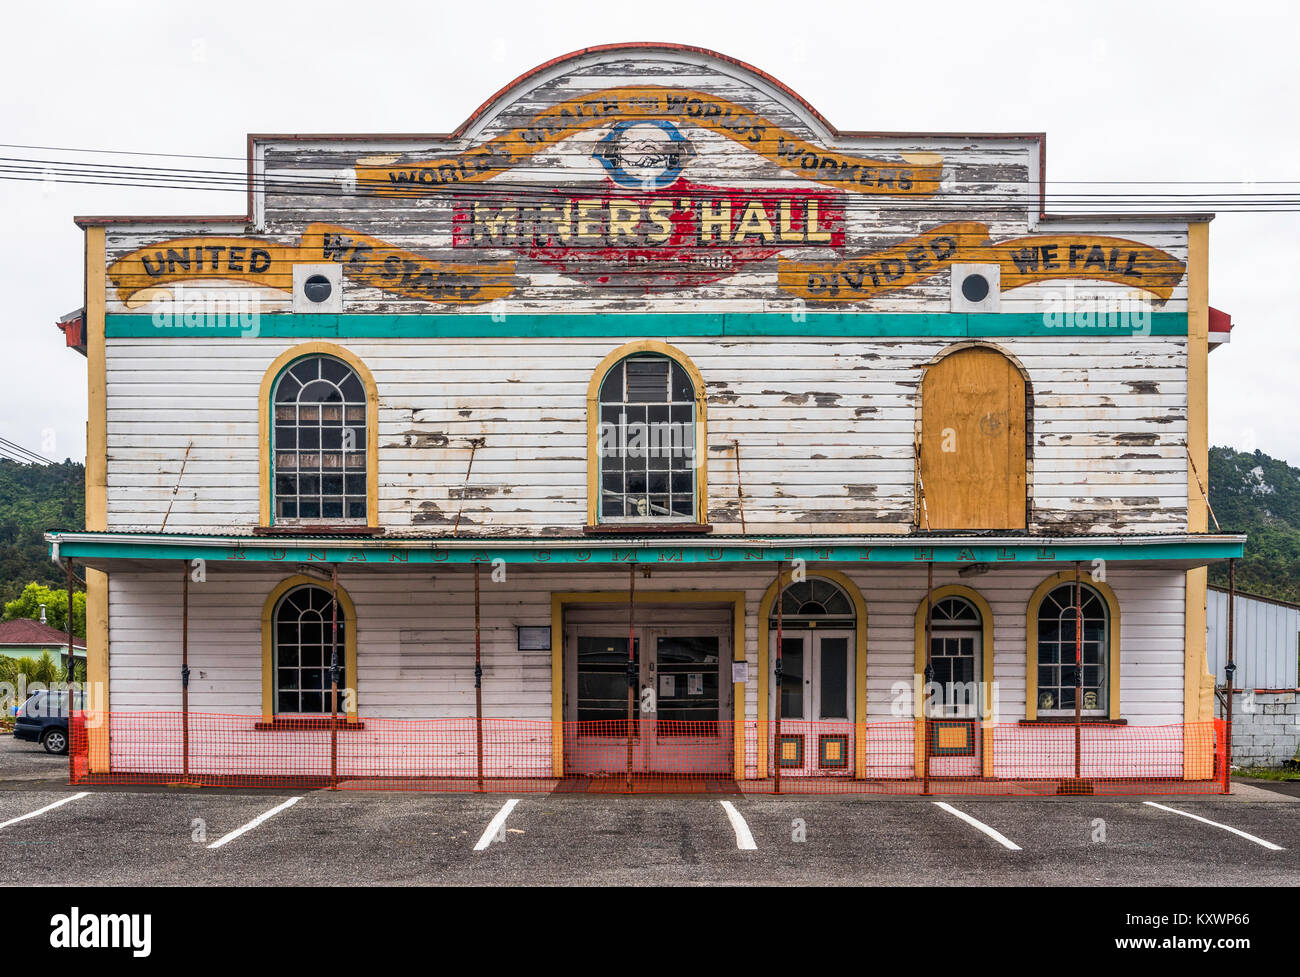 Minatore della hall, Runanga,Nuova Zelanda Foto Stock